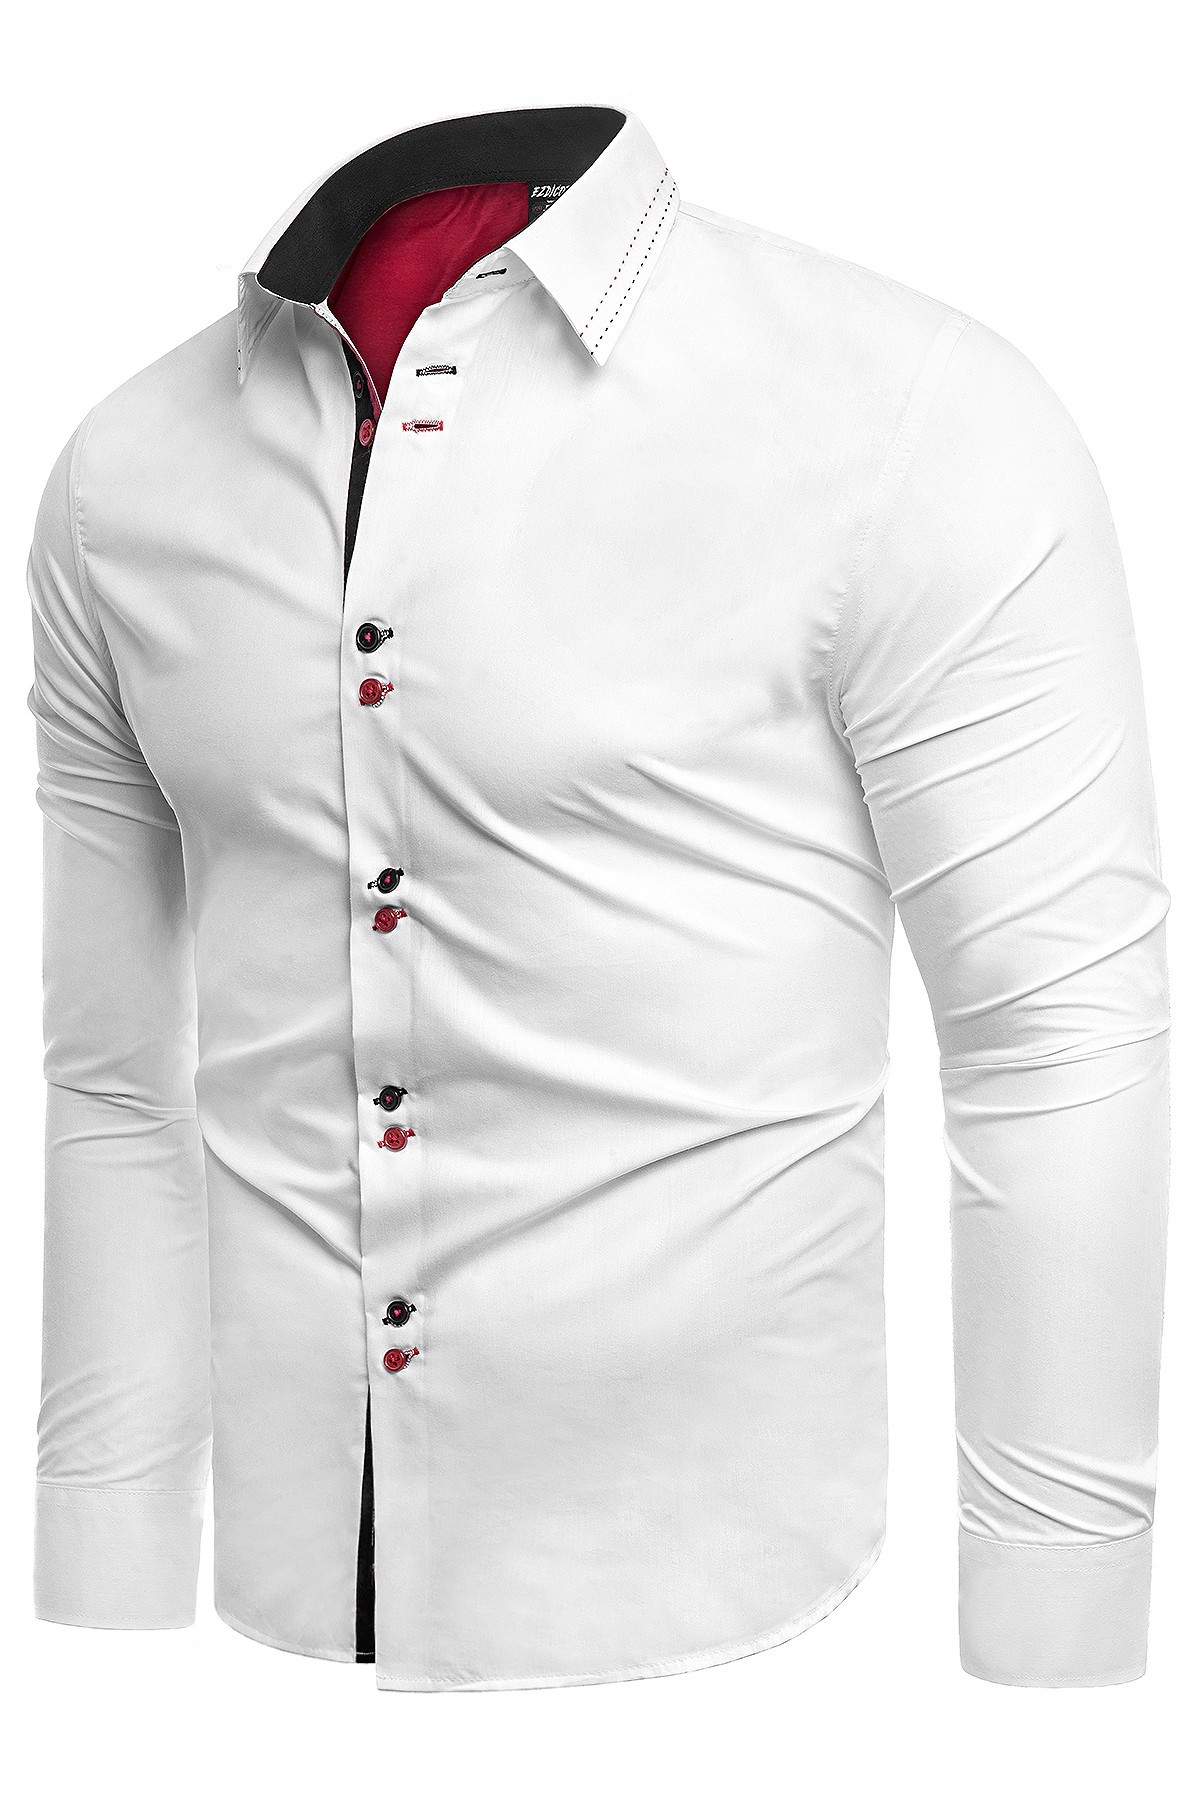 Koszula męska długi rękaw rl27 - biała